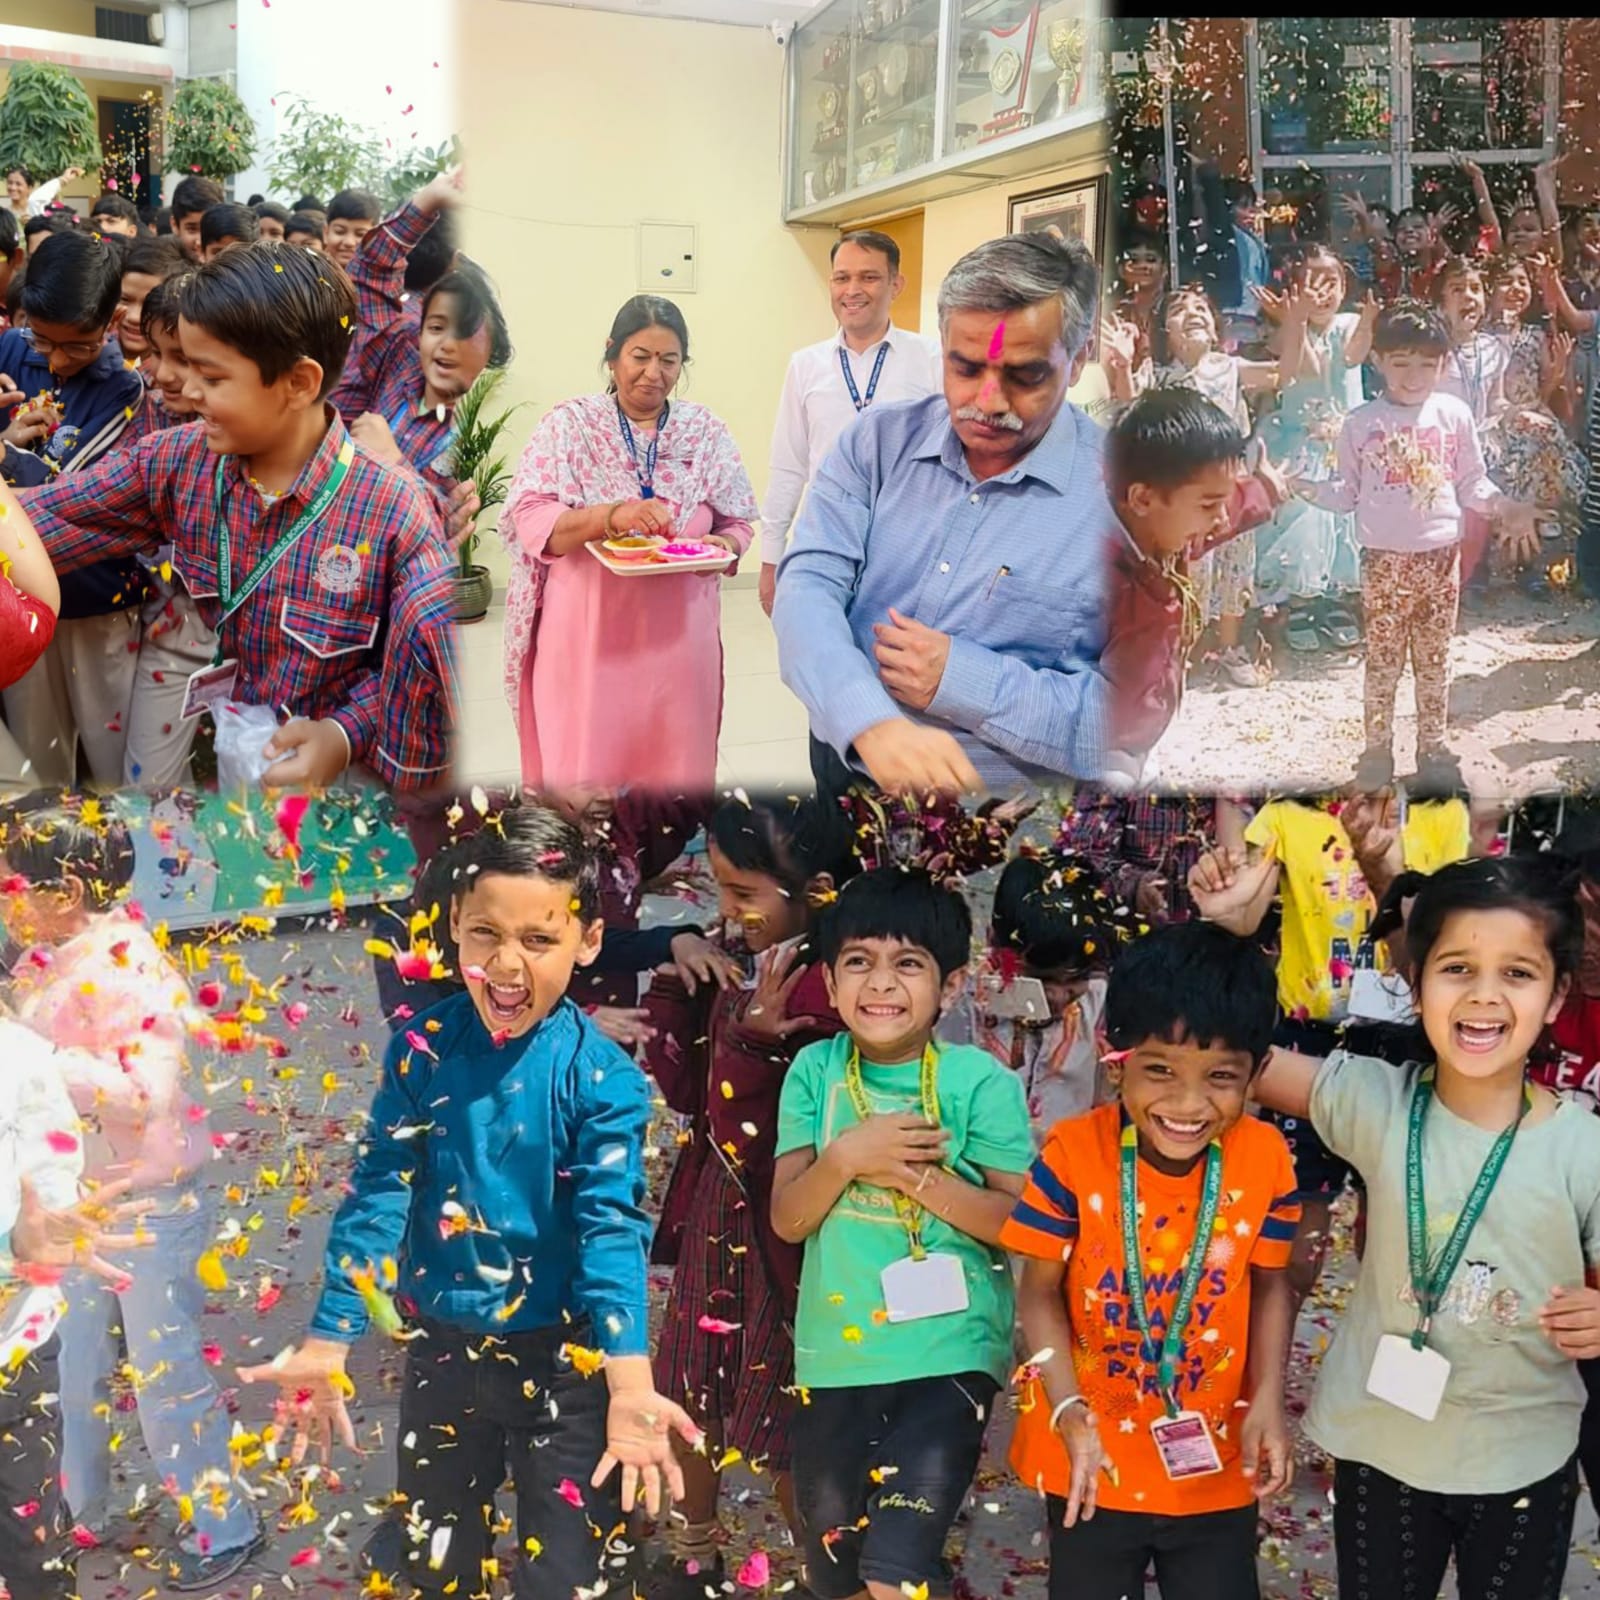 Enjoyed colorful Holi at DAV Centenary Public School Vaishali nagar